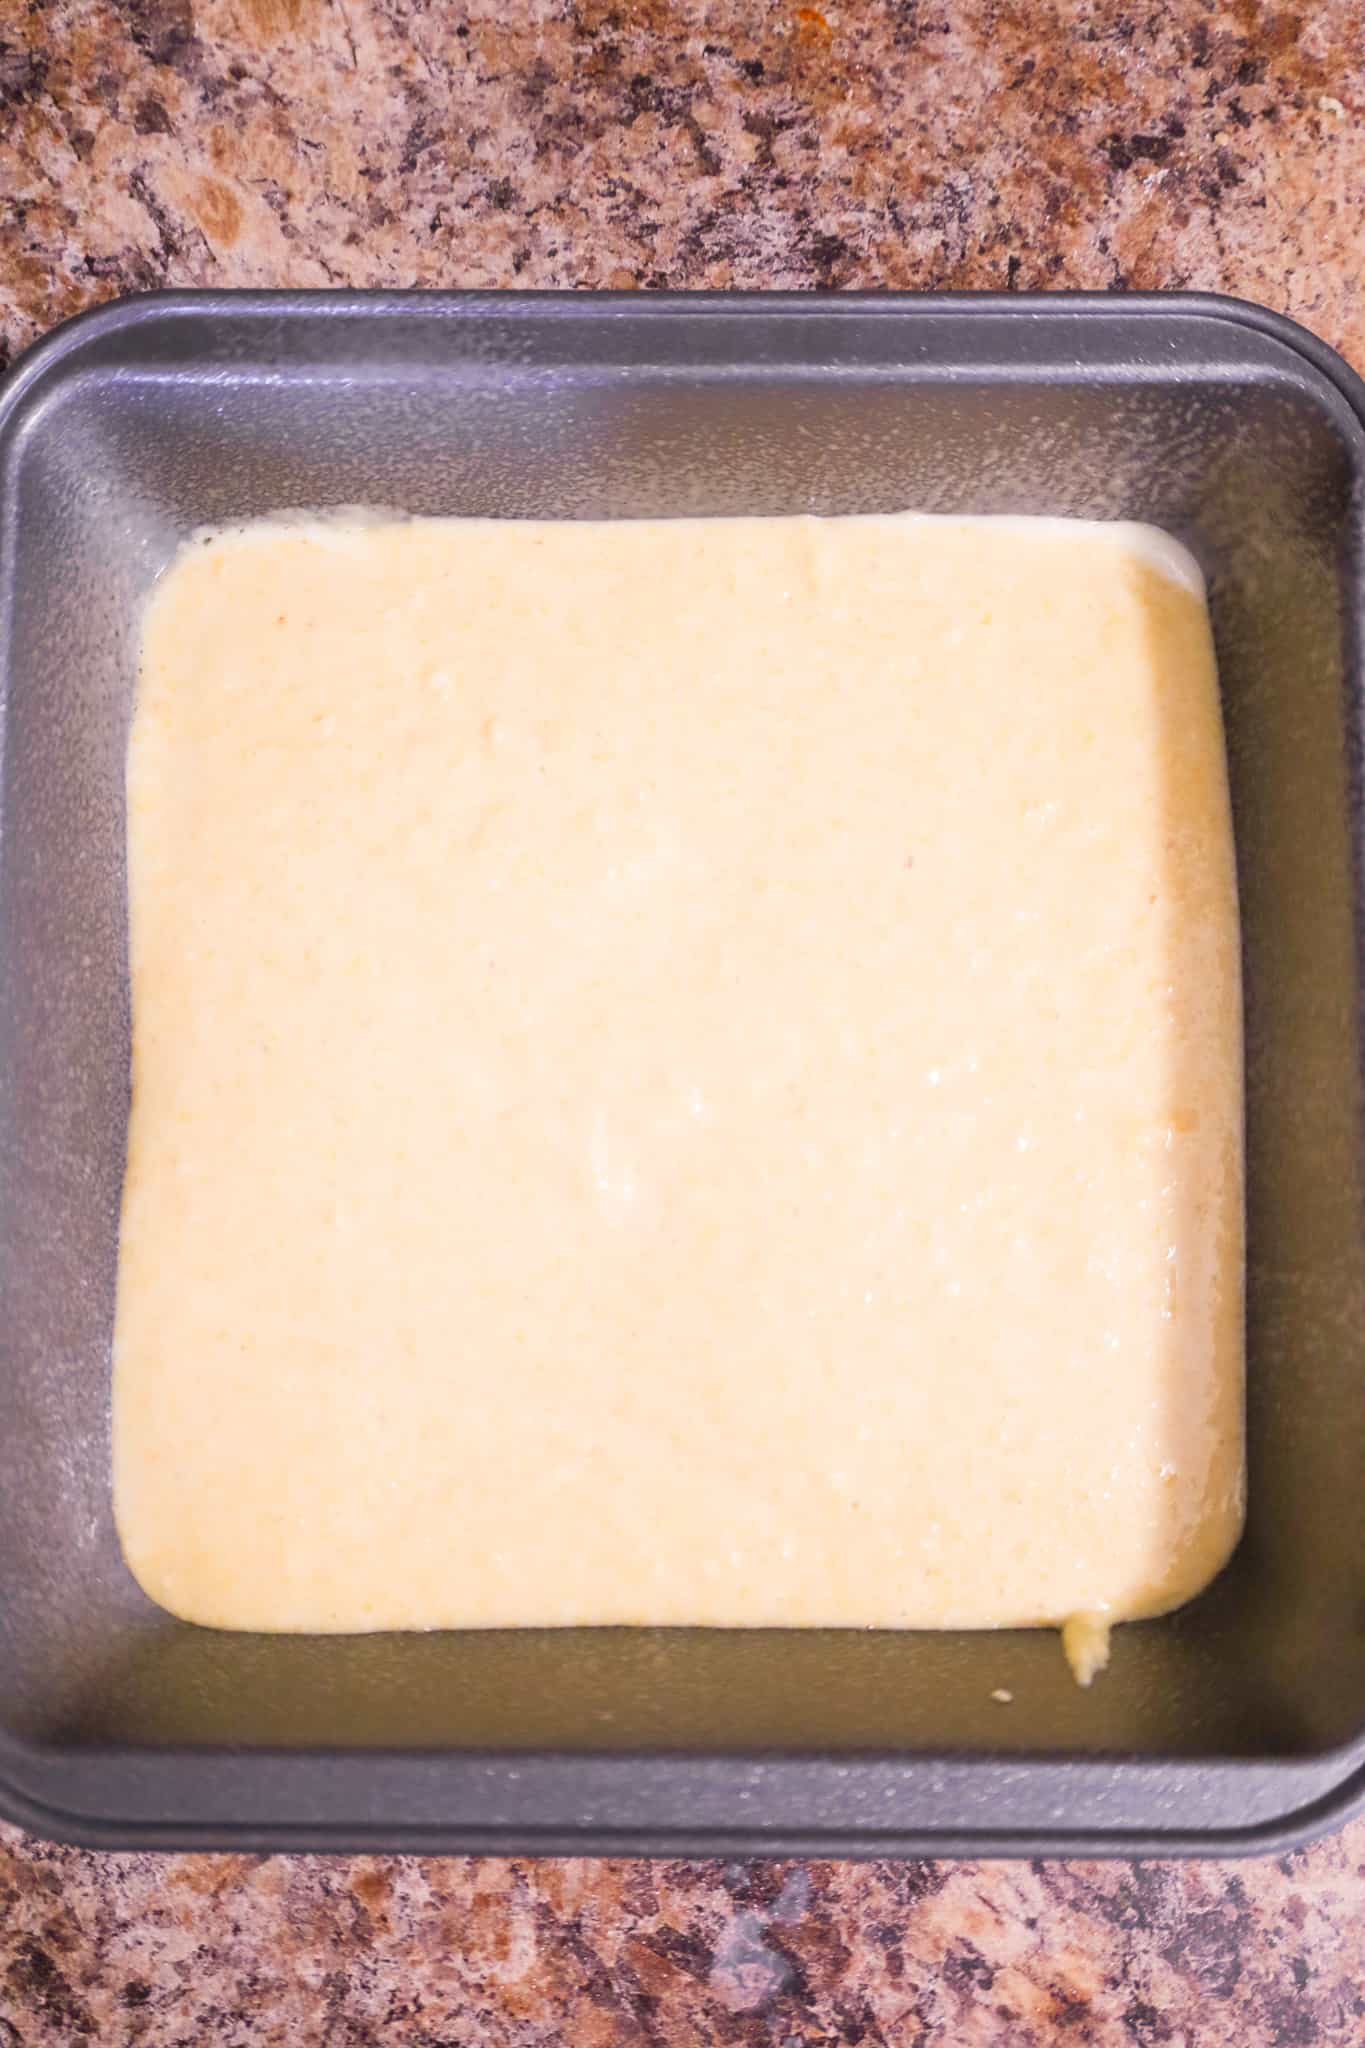 cornbread batter in a cake pan